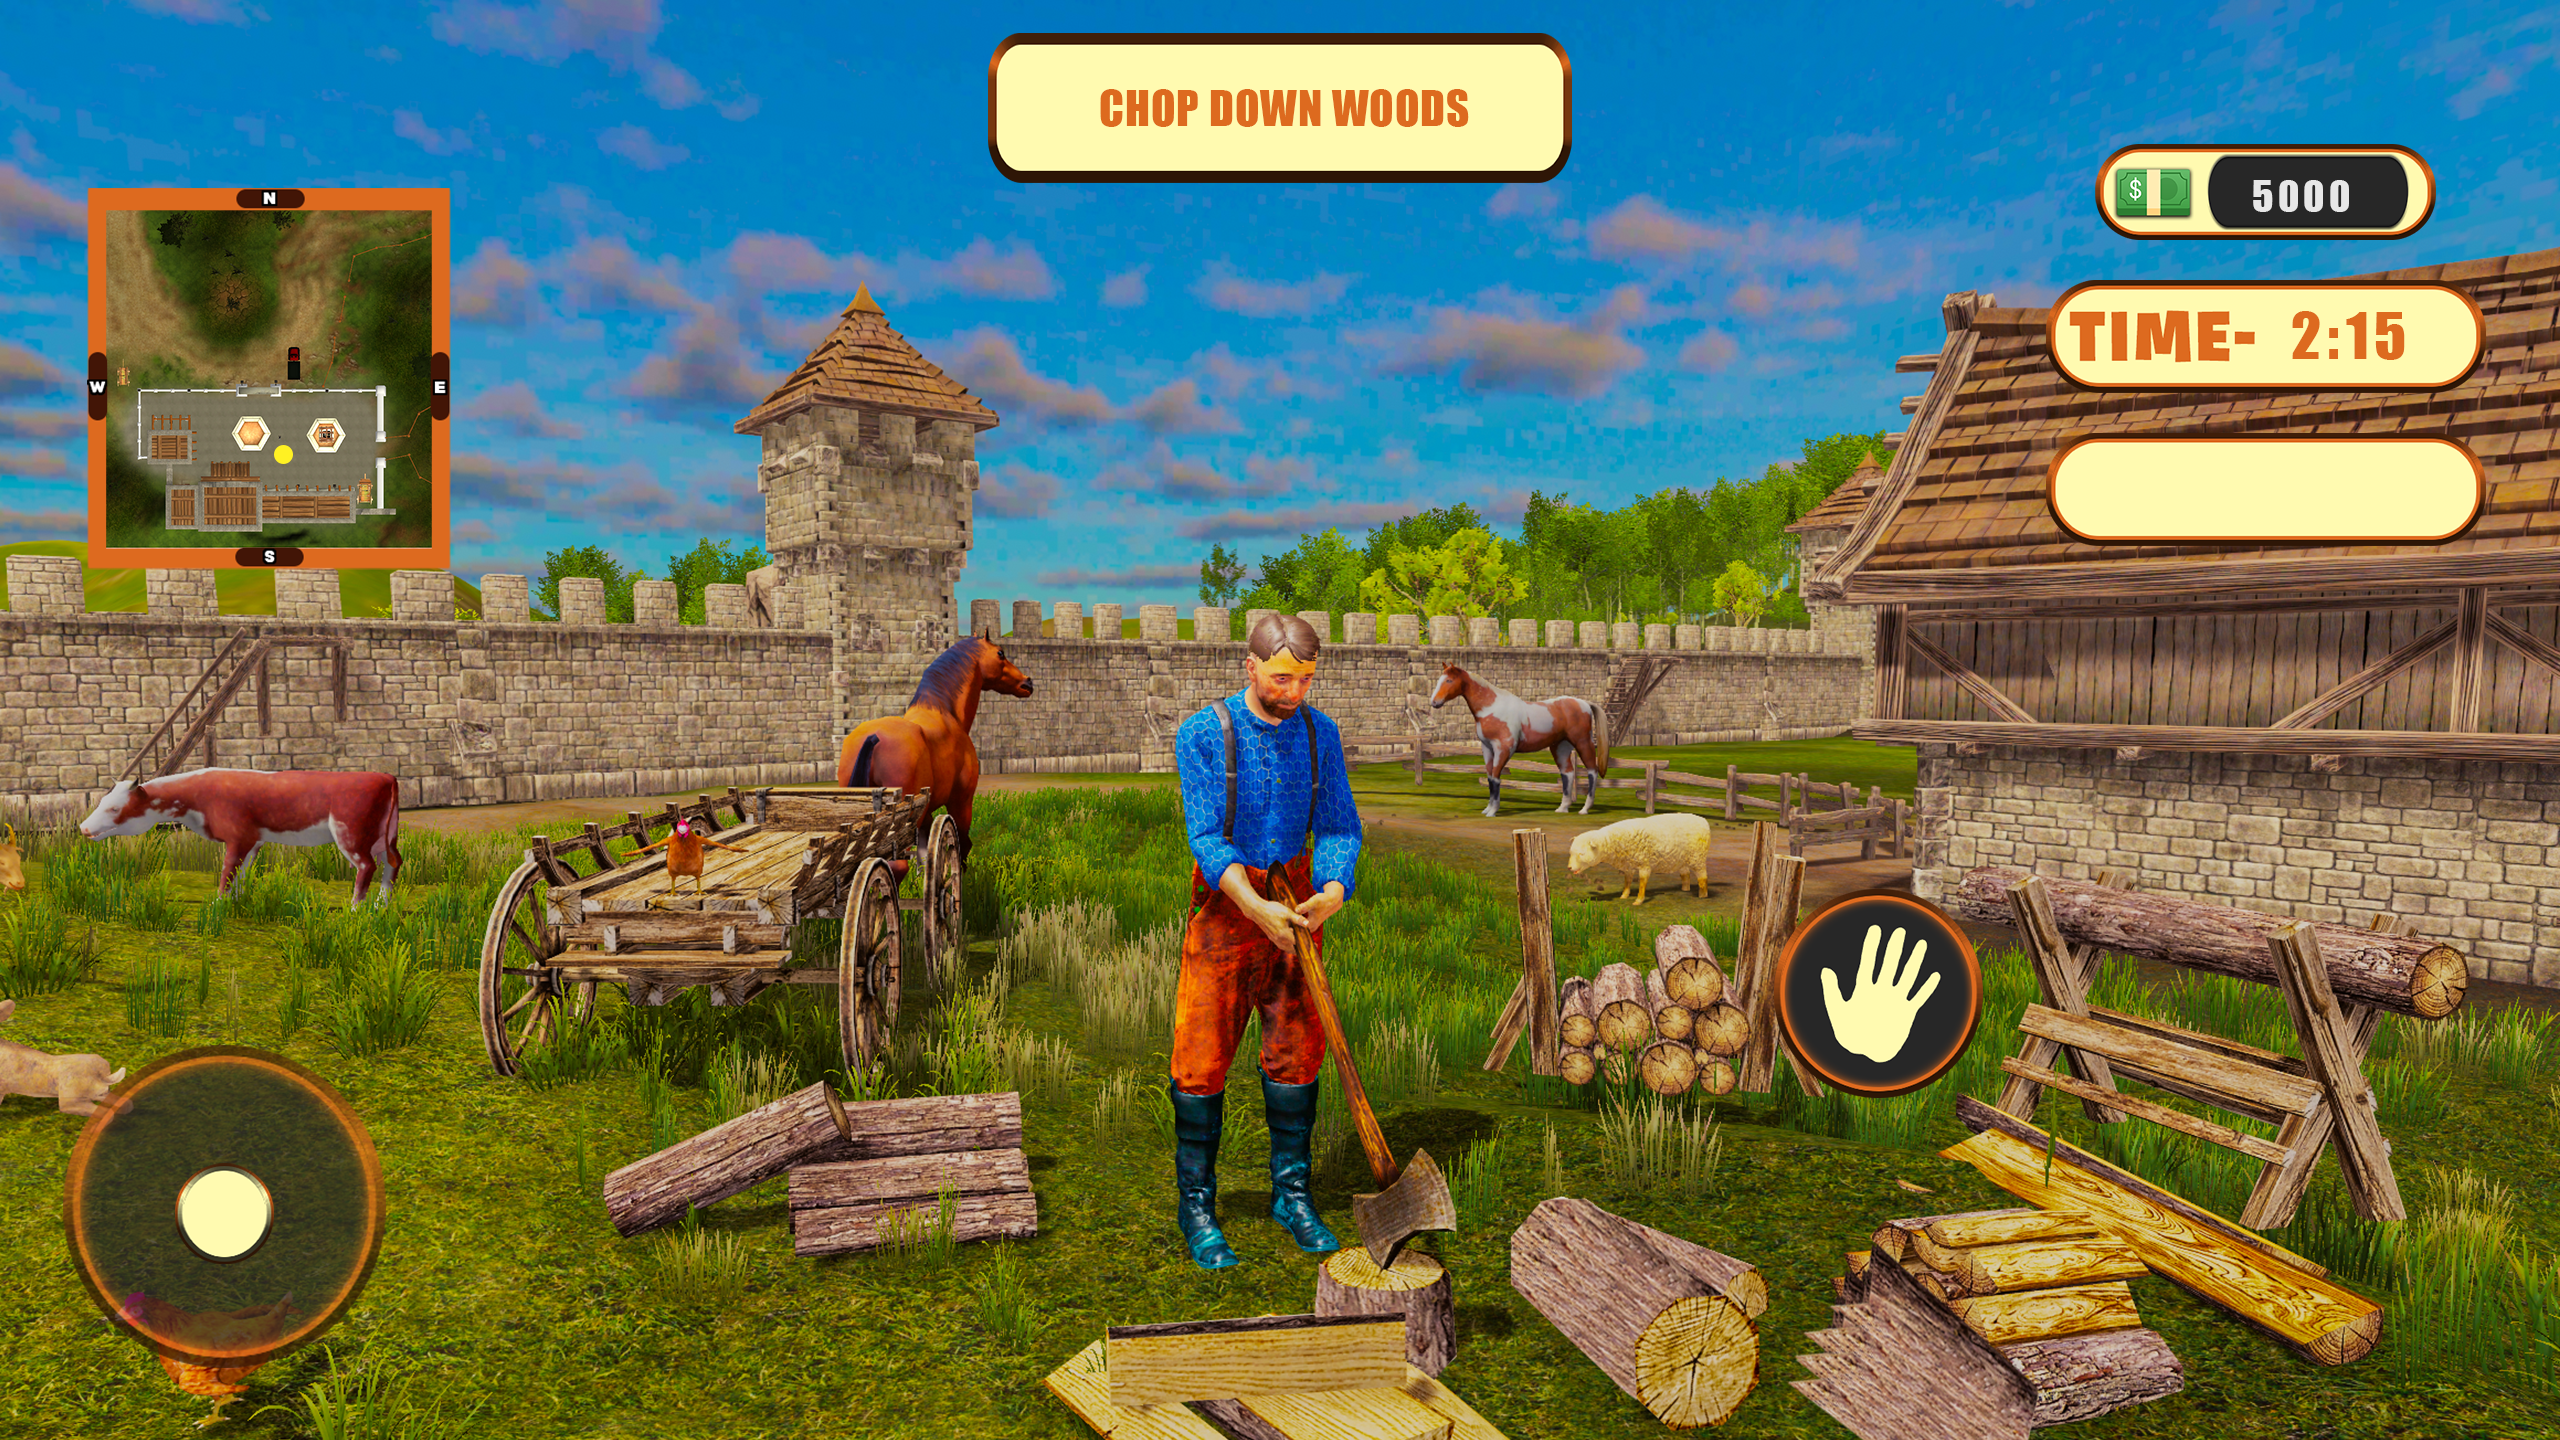 Ranch Simulator & Farming Simulator Tips APK per Android Download